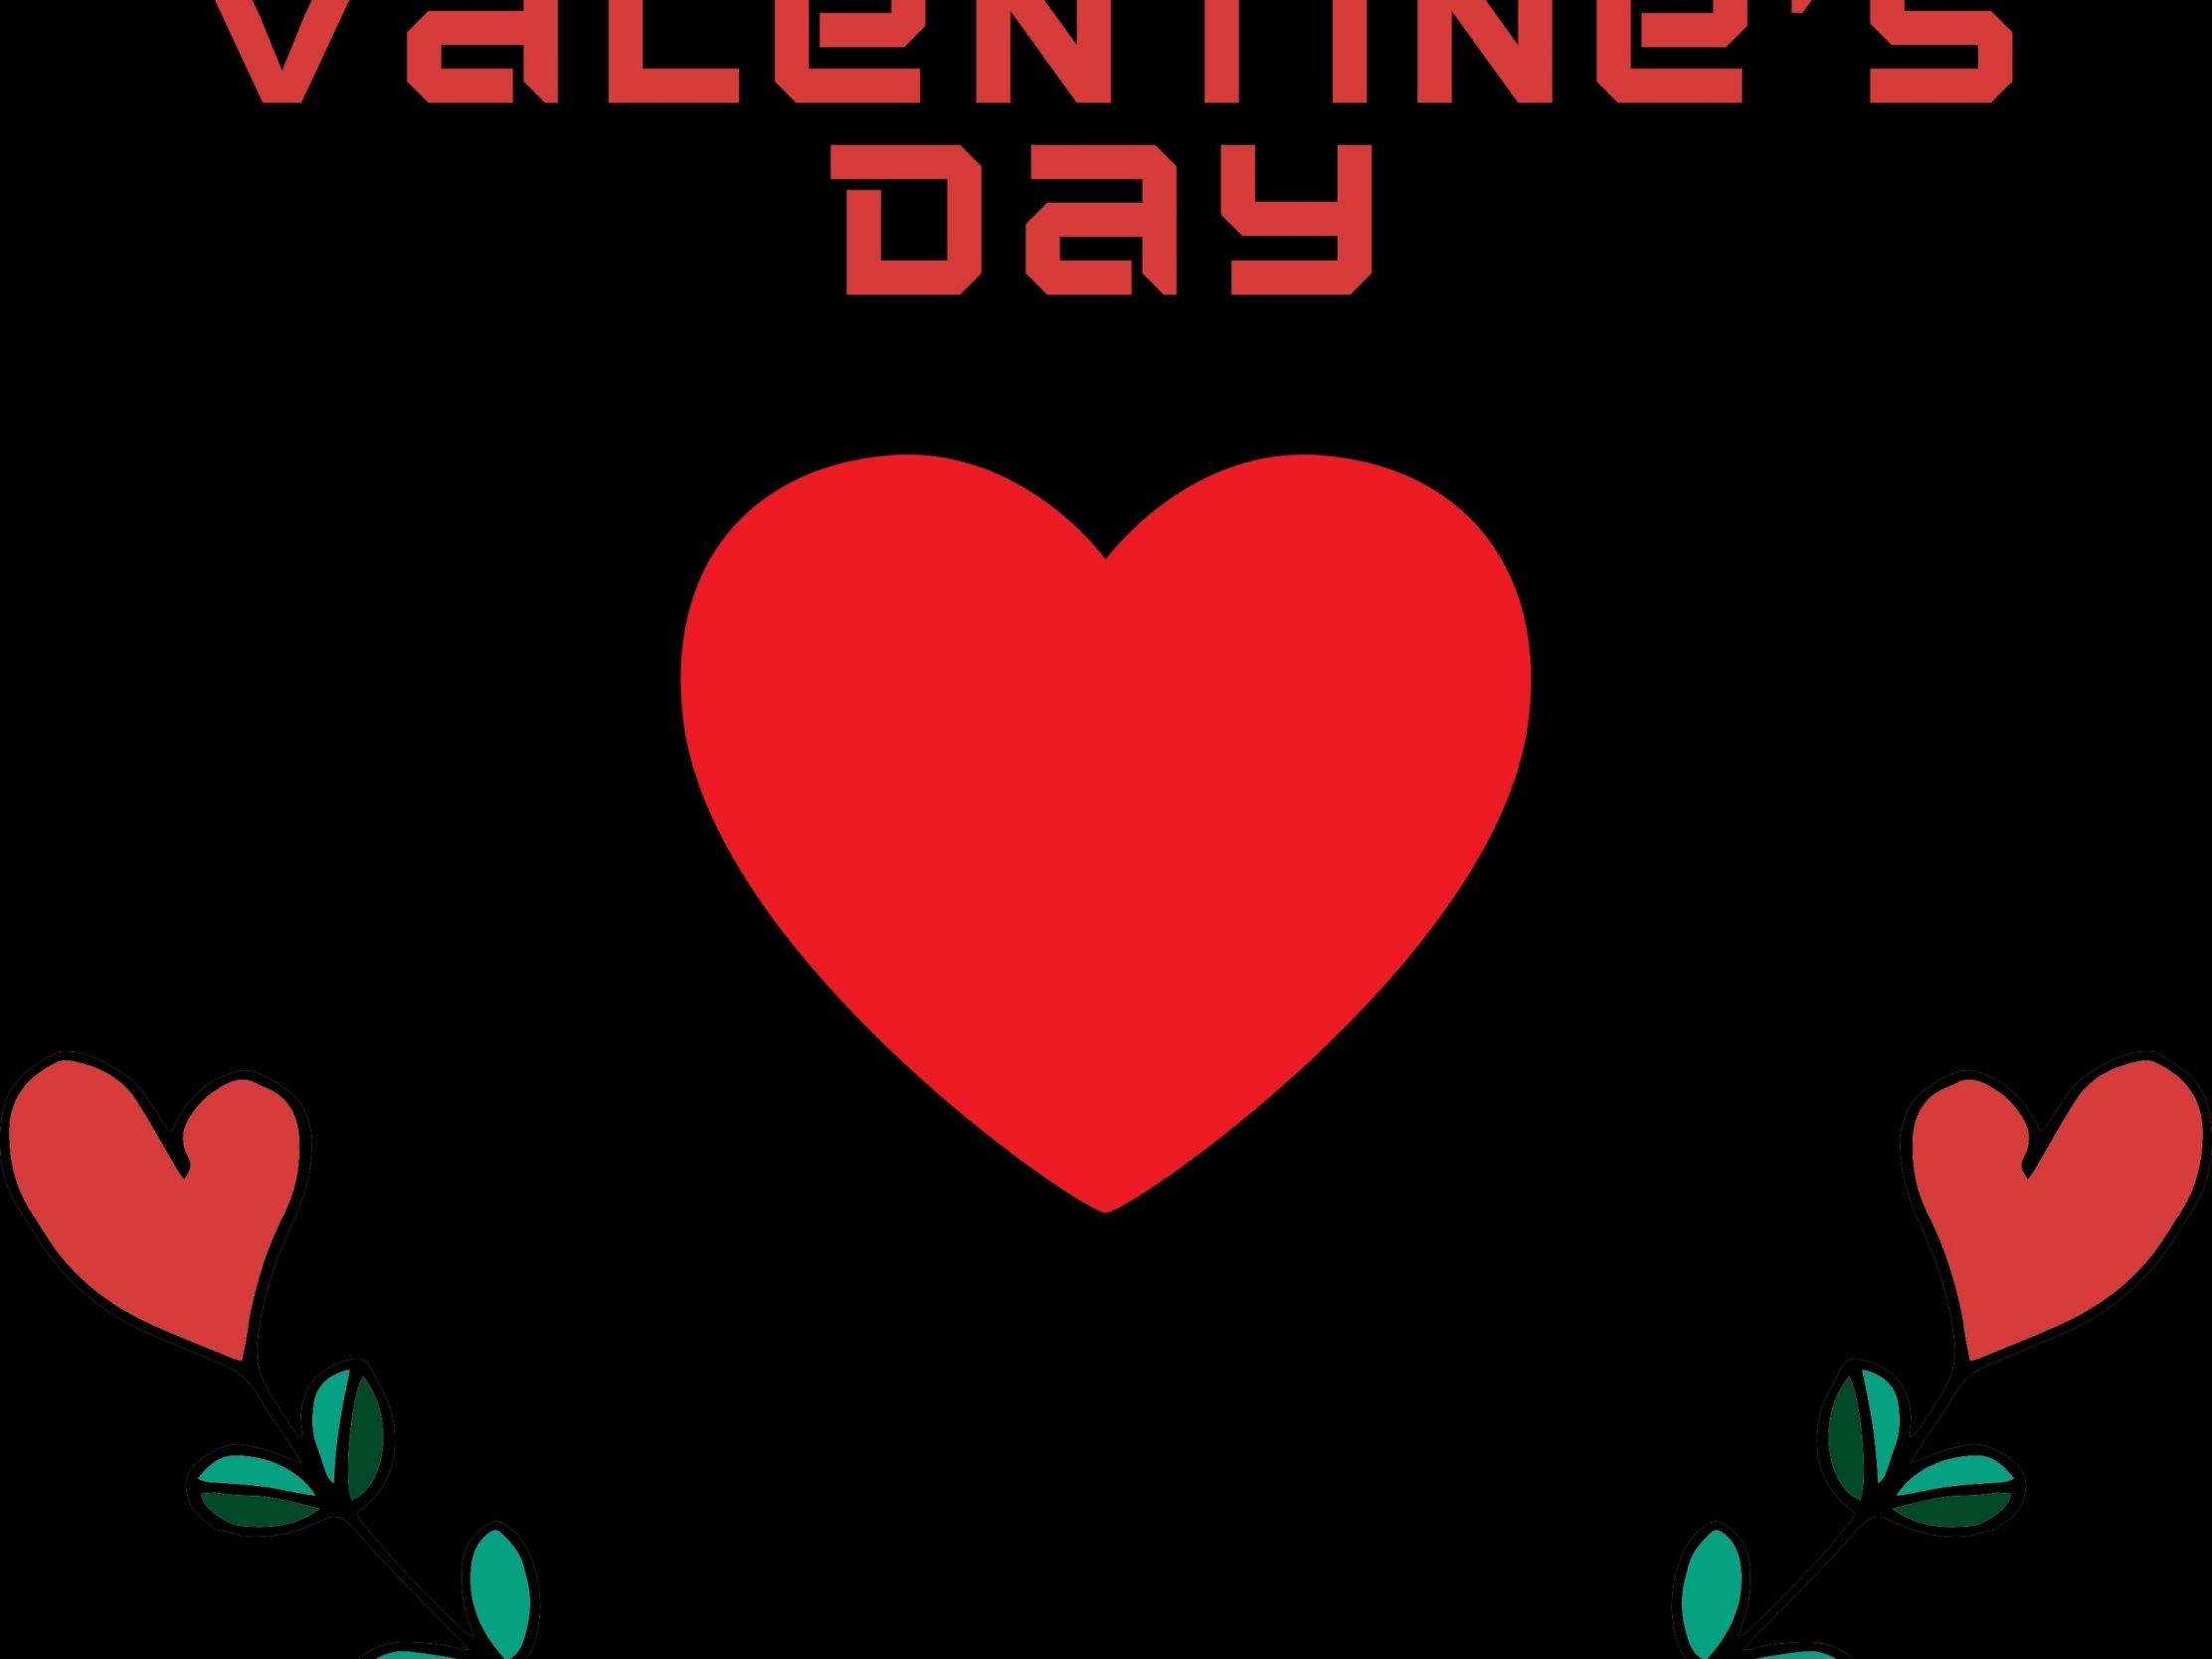 2224x1668 iPad Pro wallpapers Happy Valentines Day February 14 iPad Wallpaper 2224x1668 pixels resolution